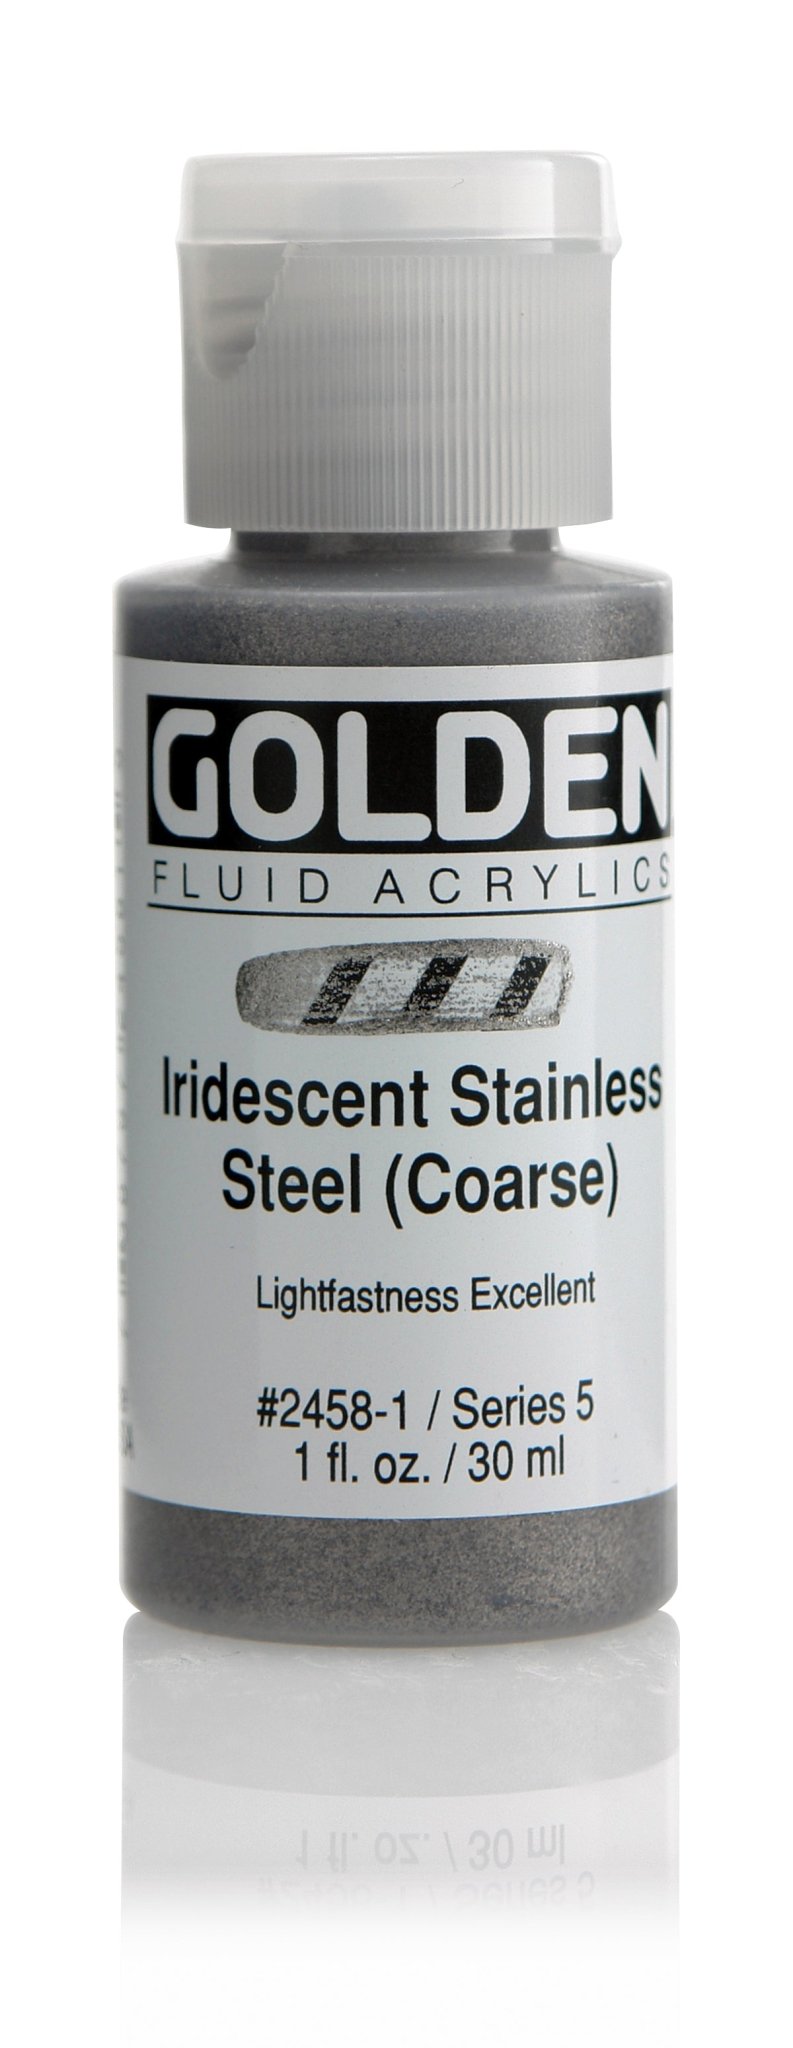 Golden Fluid Acrylic 30ml Iridescent Stainless Steel (course) - theartshop.com.au